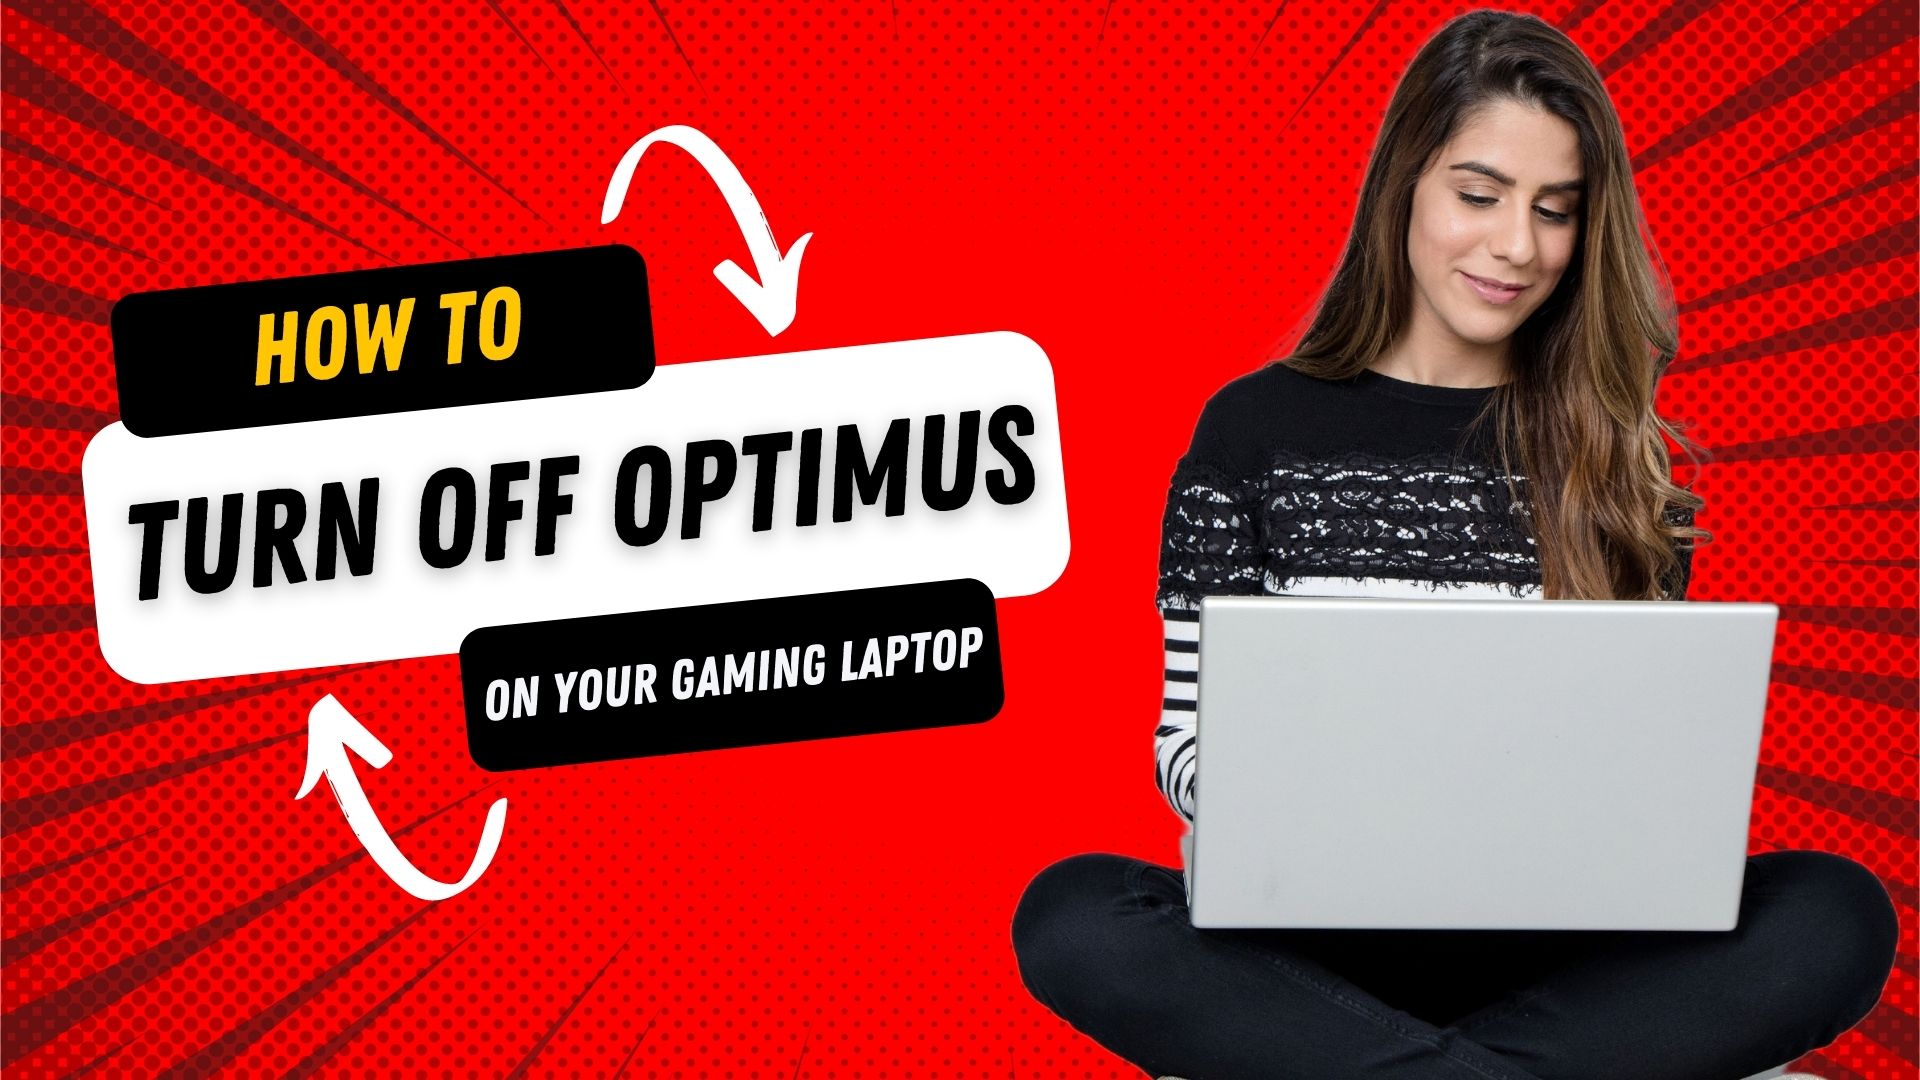 Turn Off Optimus on Your Gaming Laptop